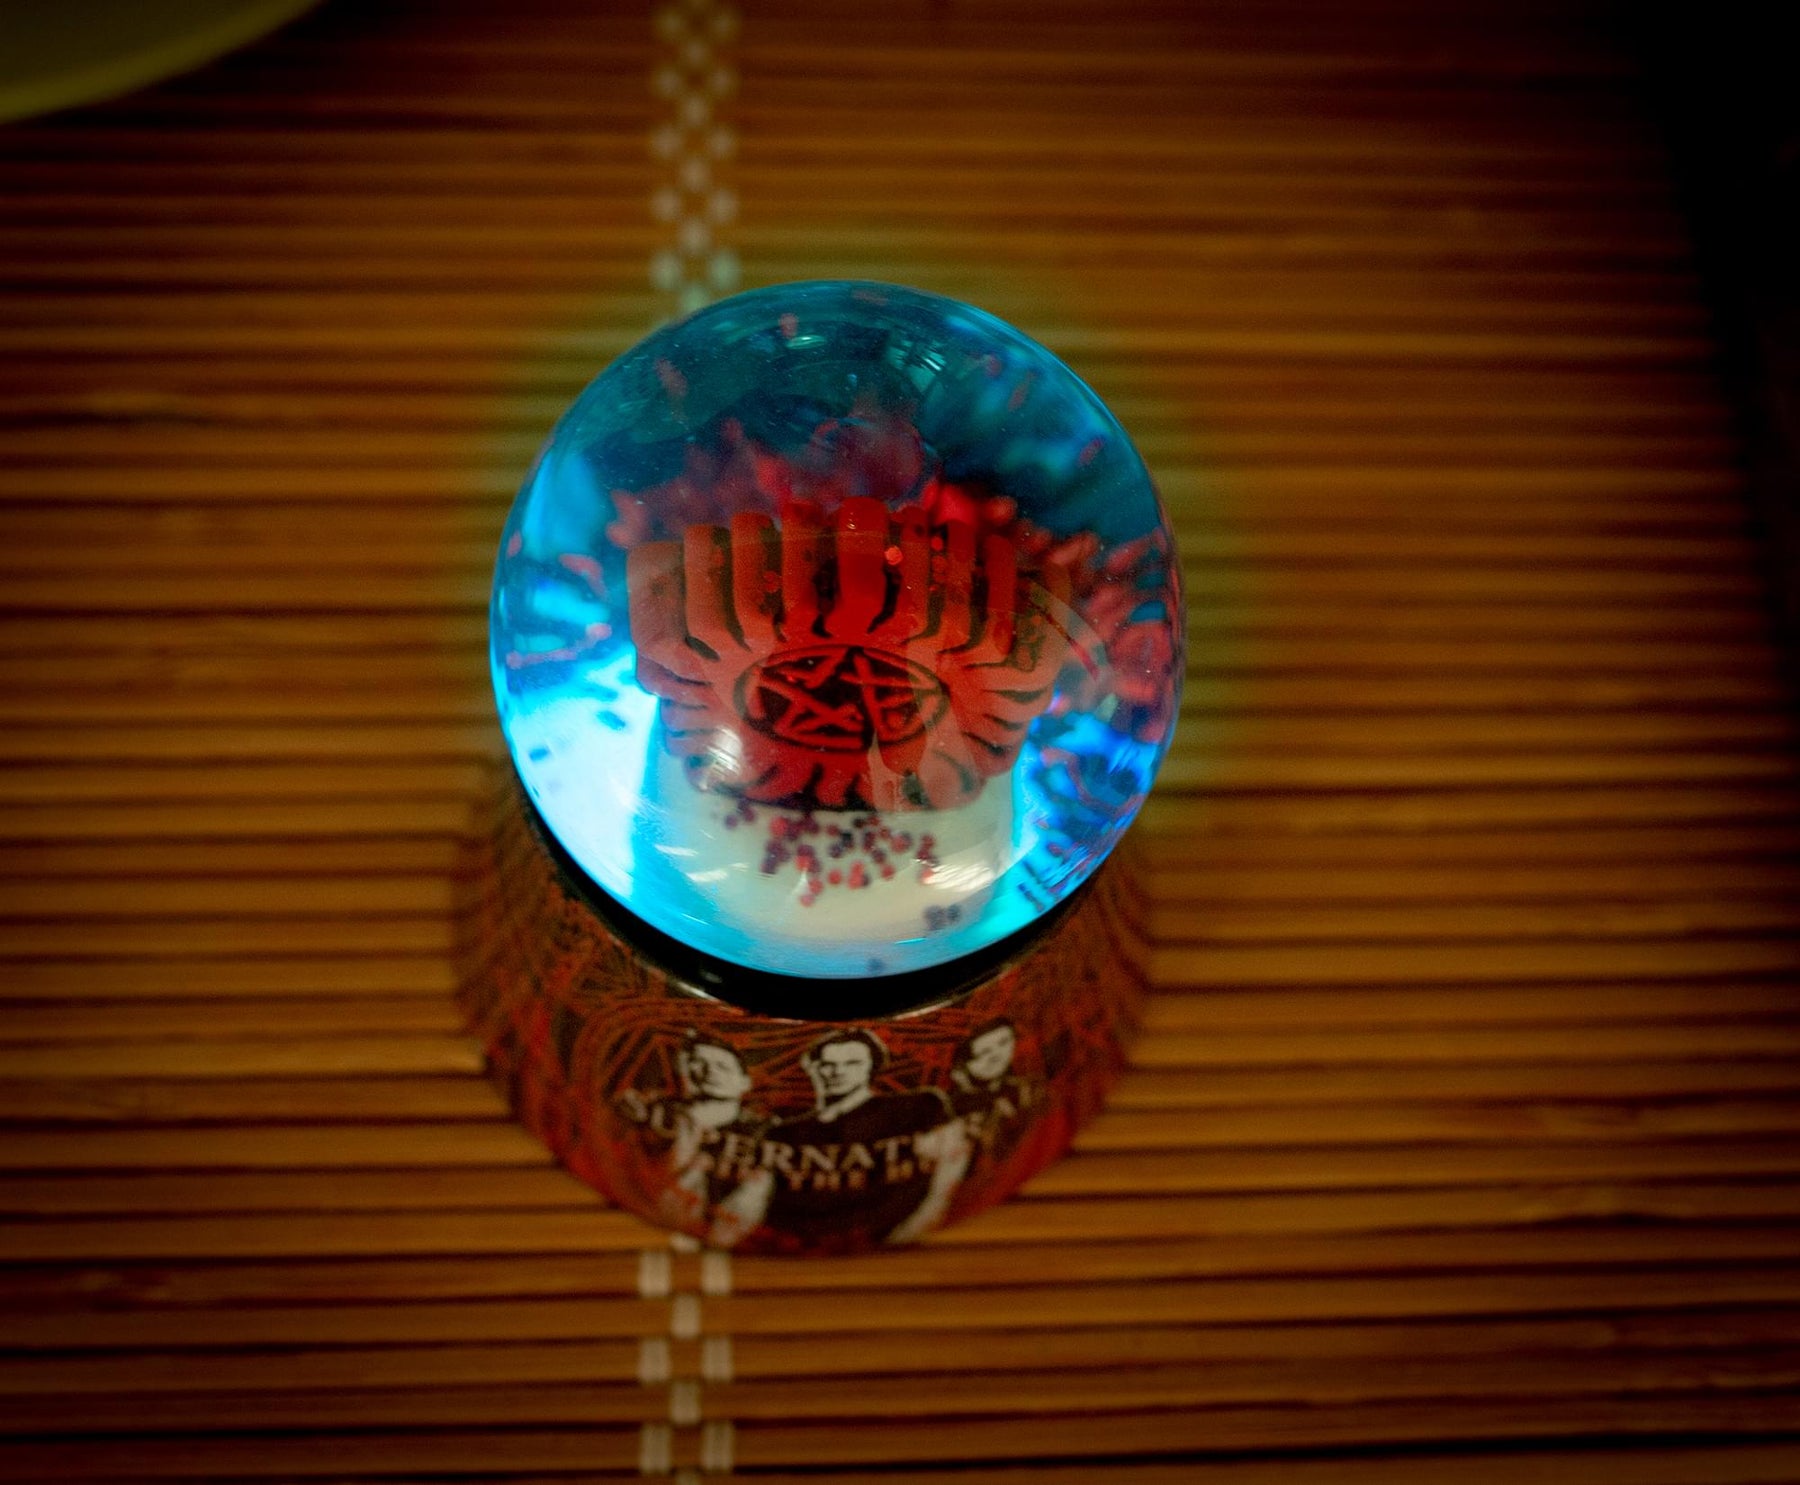 Supernatural Anti-Possession Symbol Light-Up Mini Snow Globe | 2.75 Inches Tall